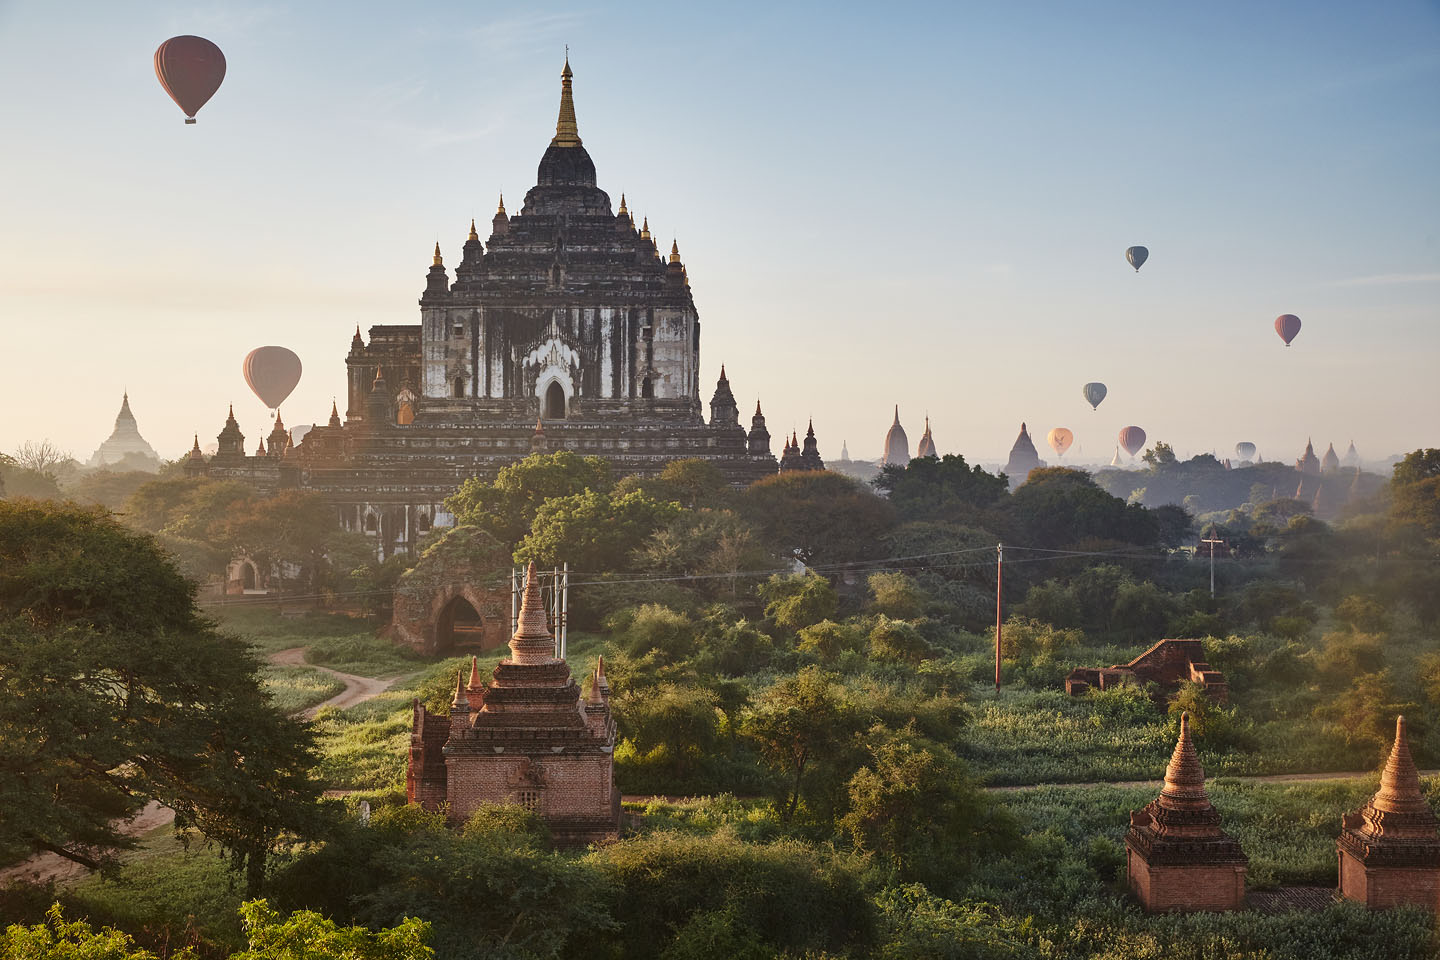 Balloons of Bagan